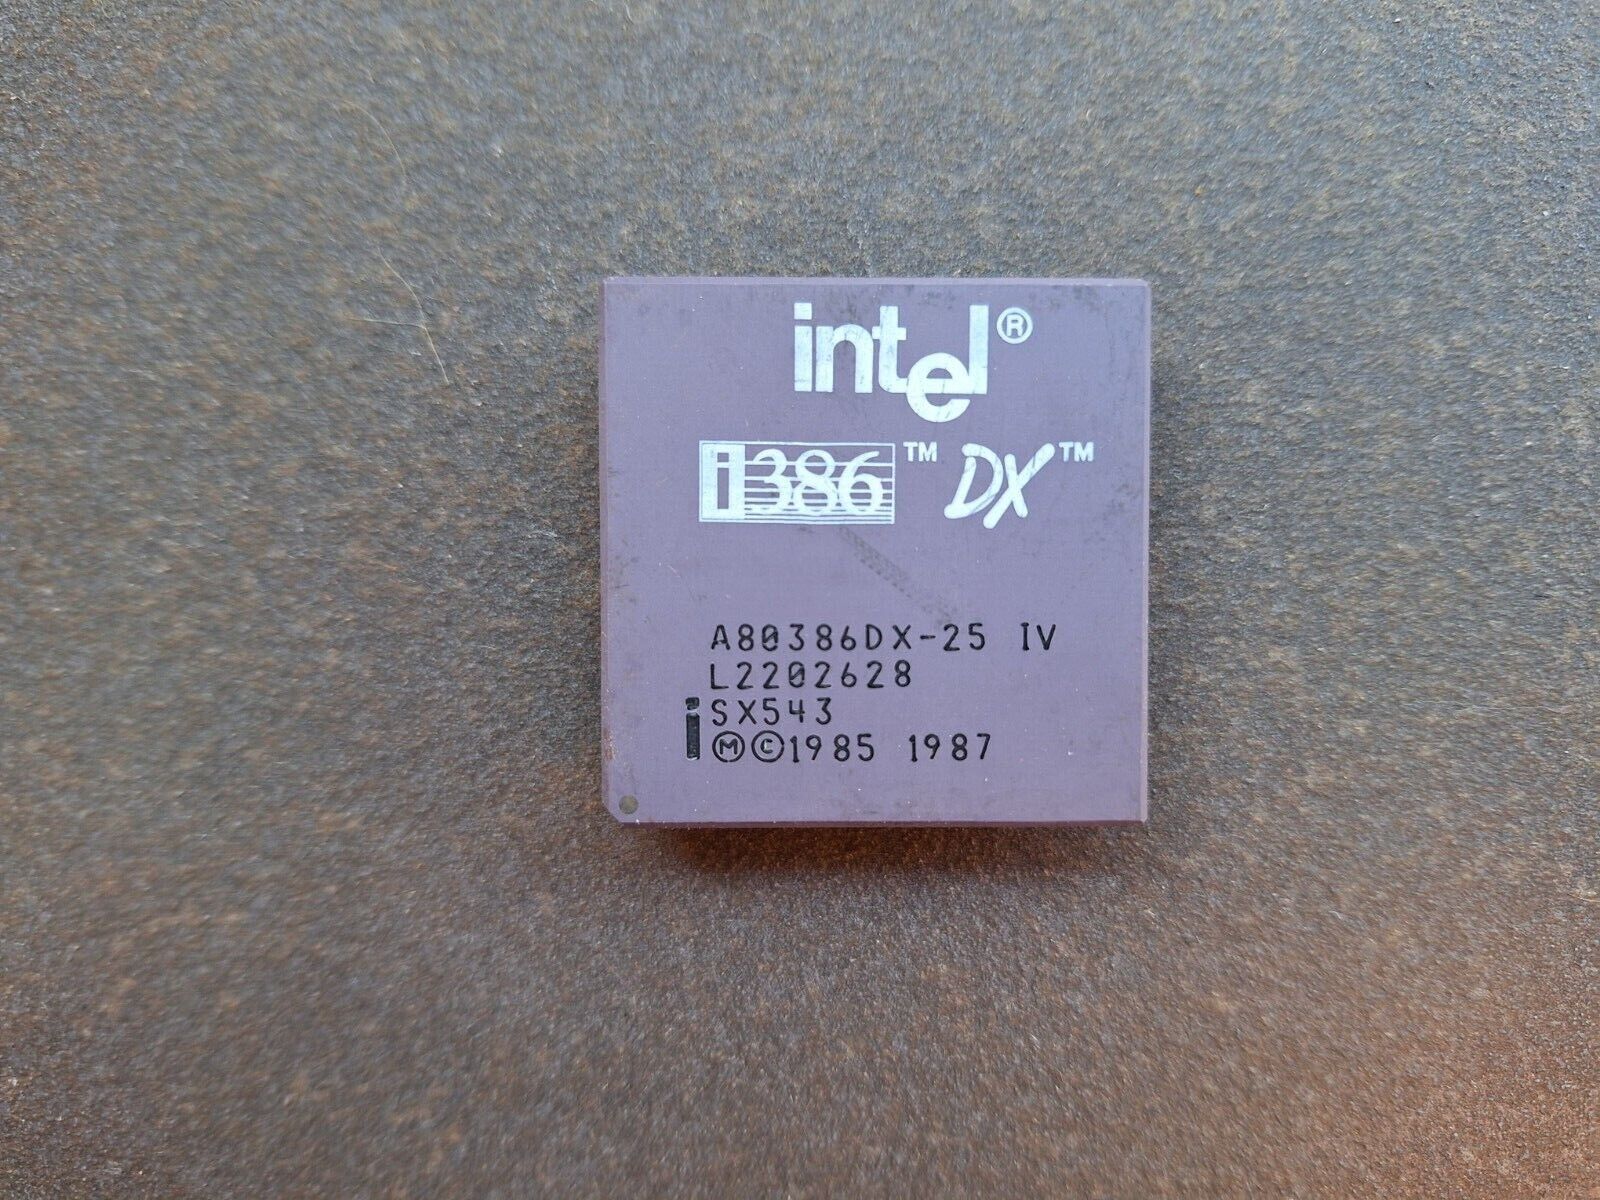 386DX Intel A80386DX-25 IV SX543 386 33Mhz vintage CPU GOLD